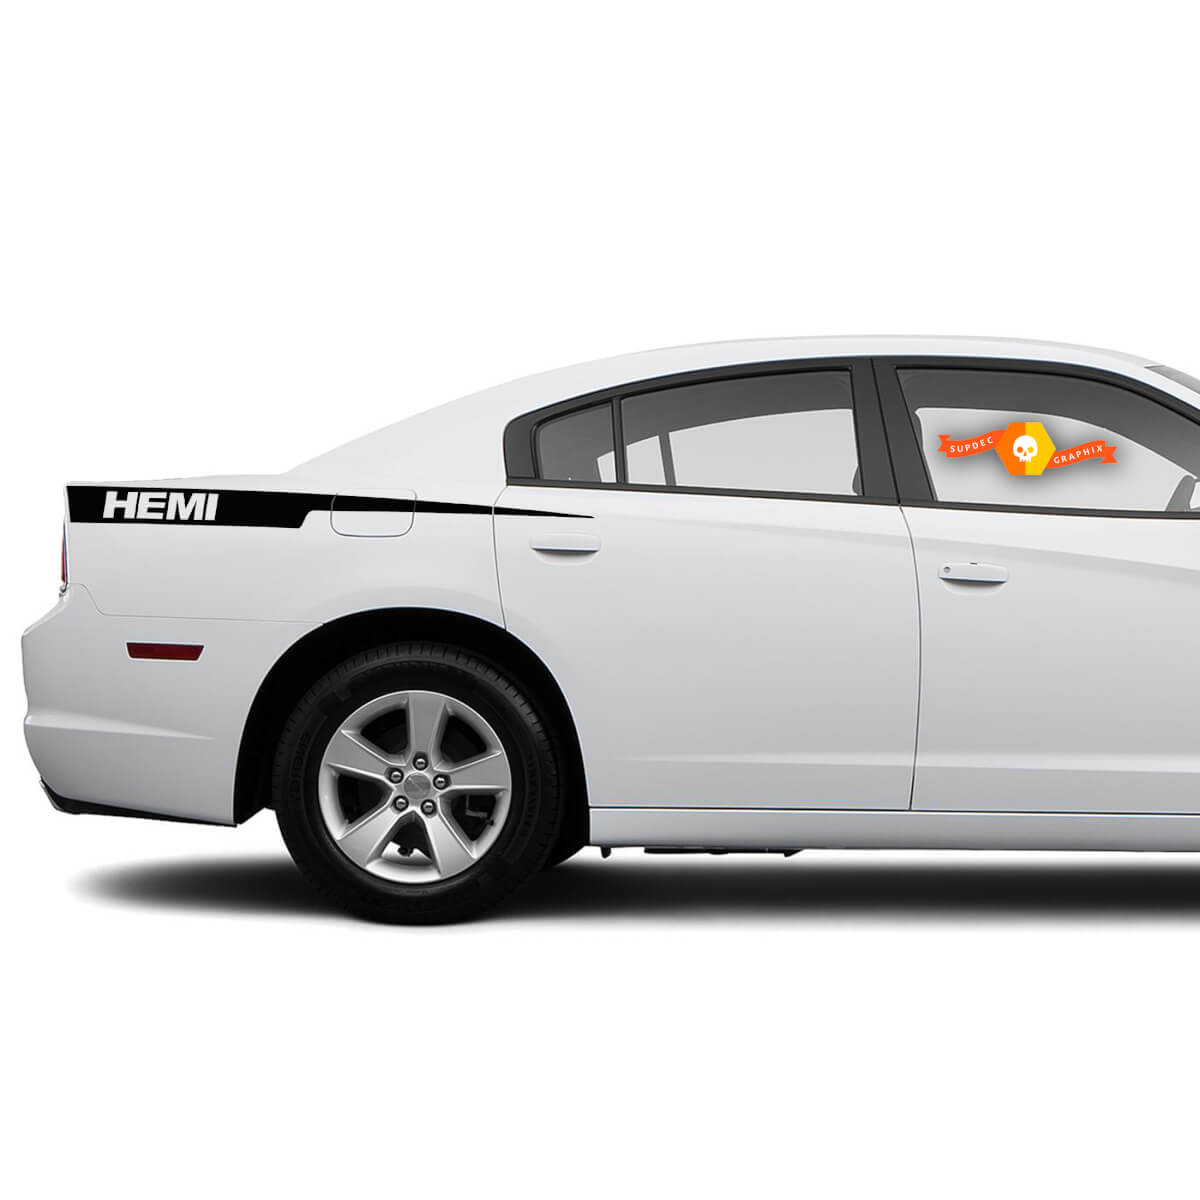 Dodge Charger Hemi Rasiermesser Aufkleber Aufkleber Seitengrafiken passen zu Modellen 2011-2014